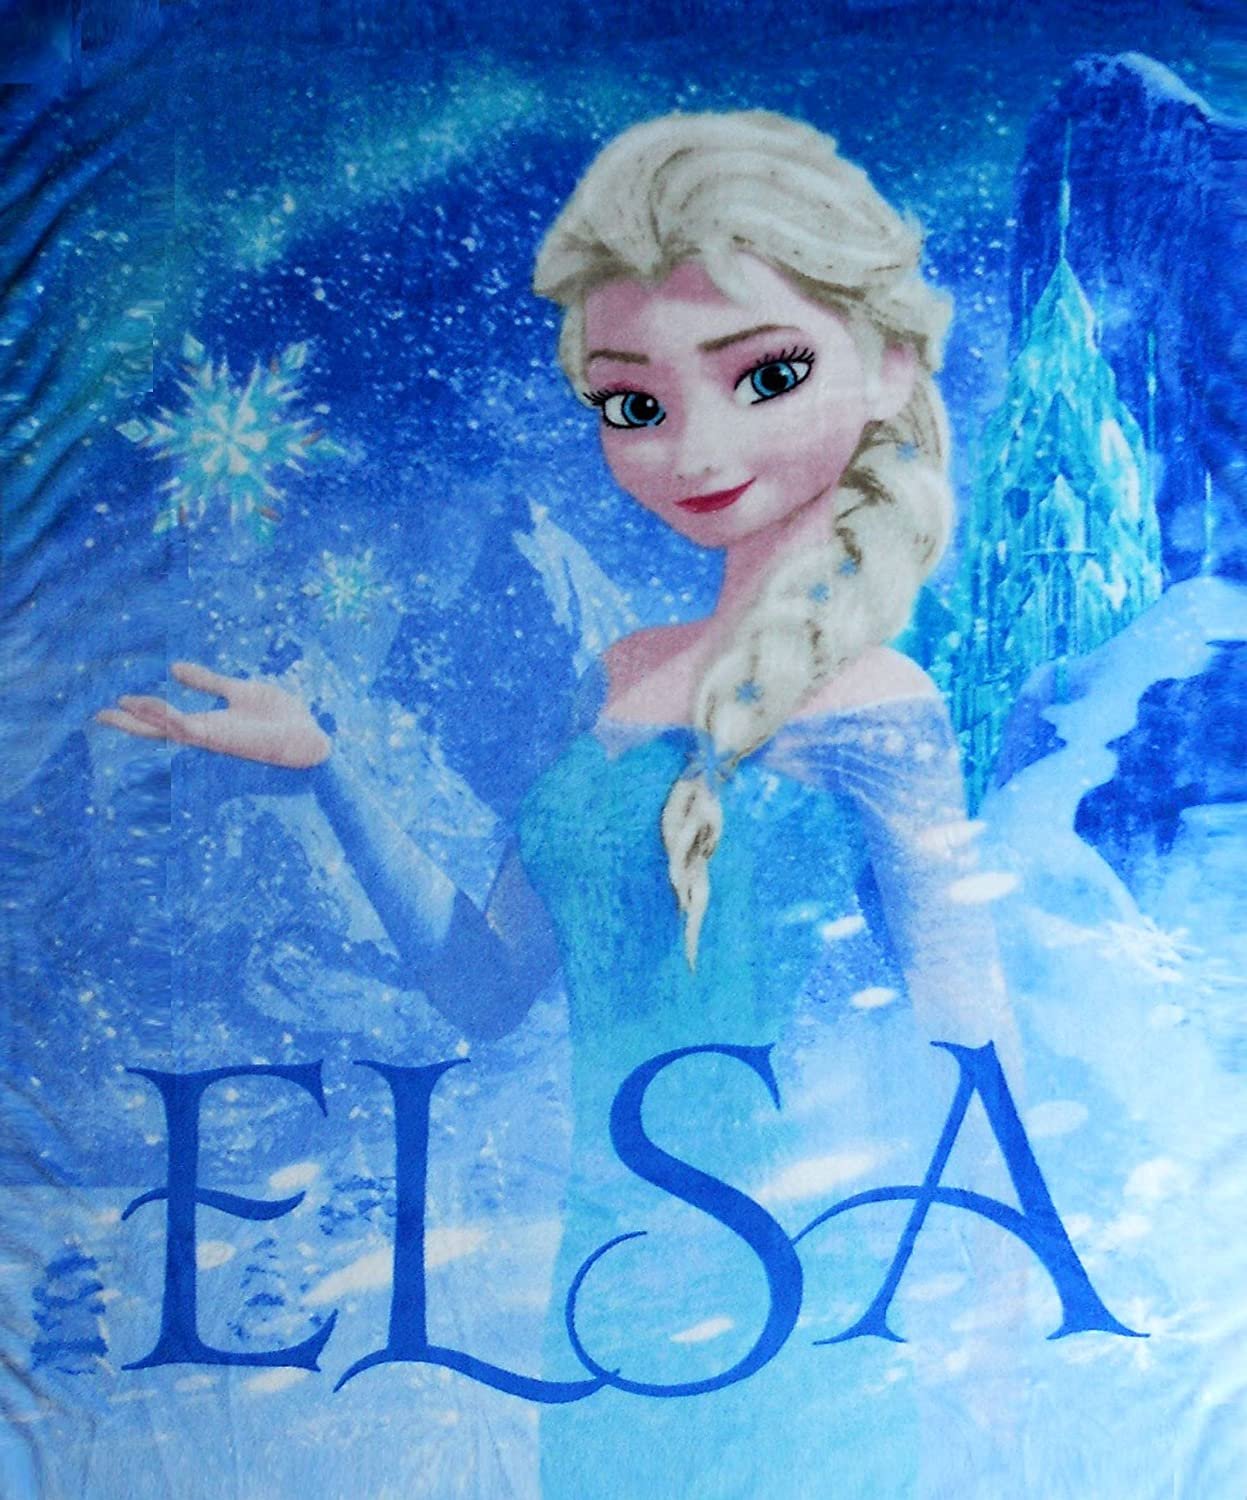 Disney Frozen Elsa Palace 40" x 50" Silk-Touch Throw, 1 Each - image 1 of 2